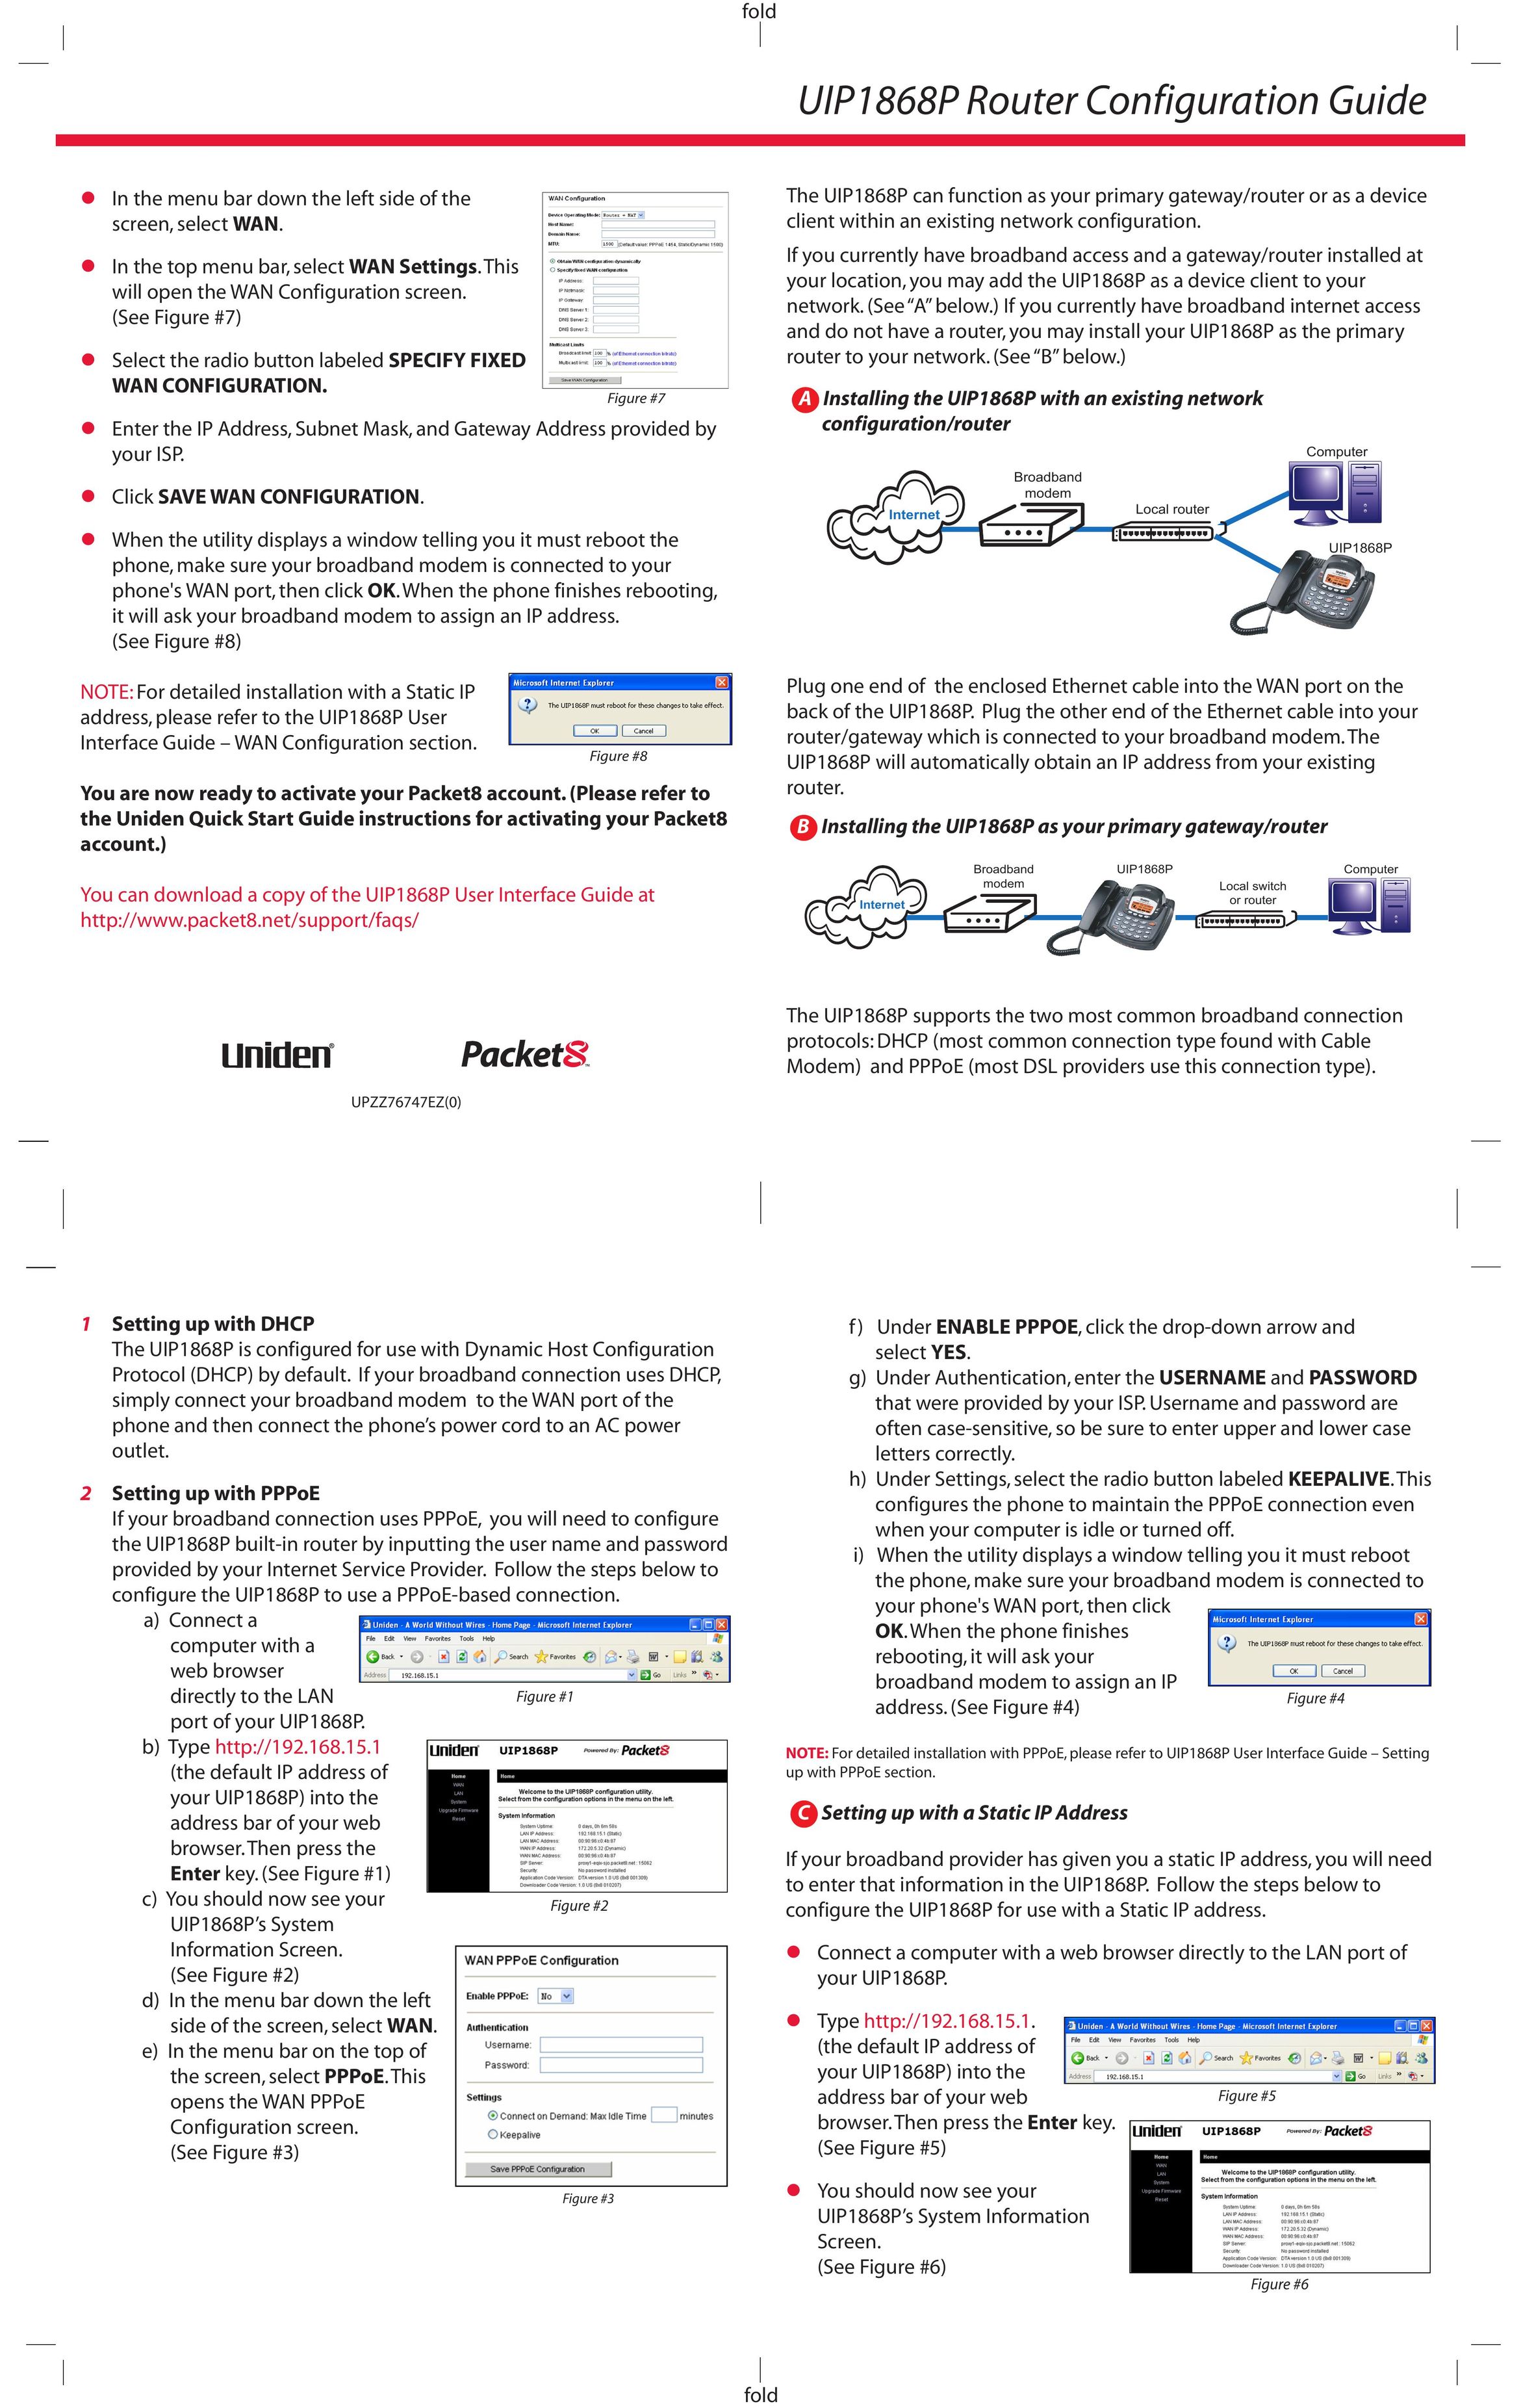 Uniden UIP1868P Network Router User Manual